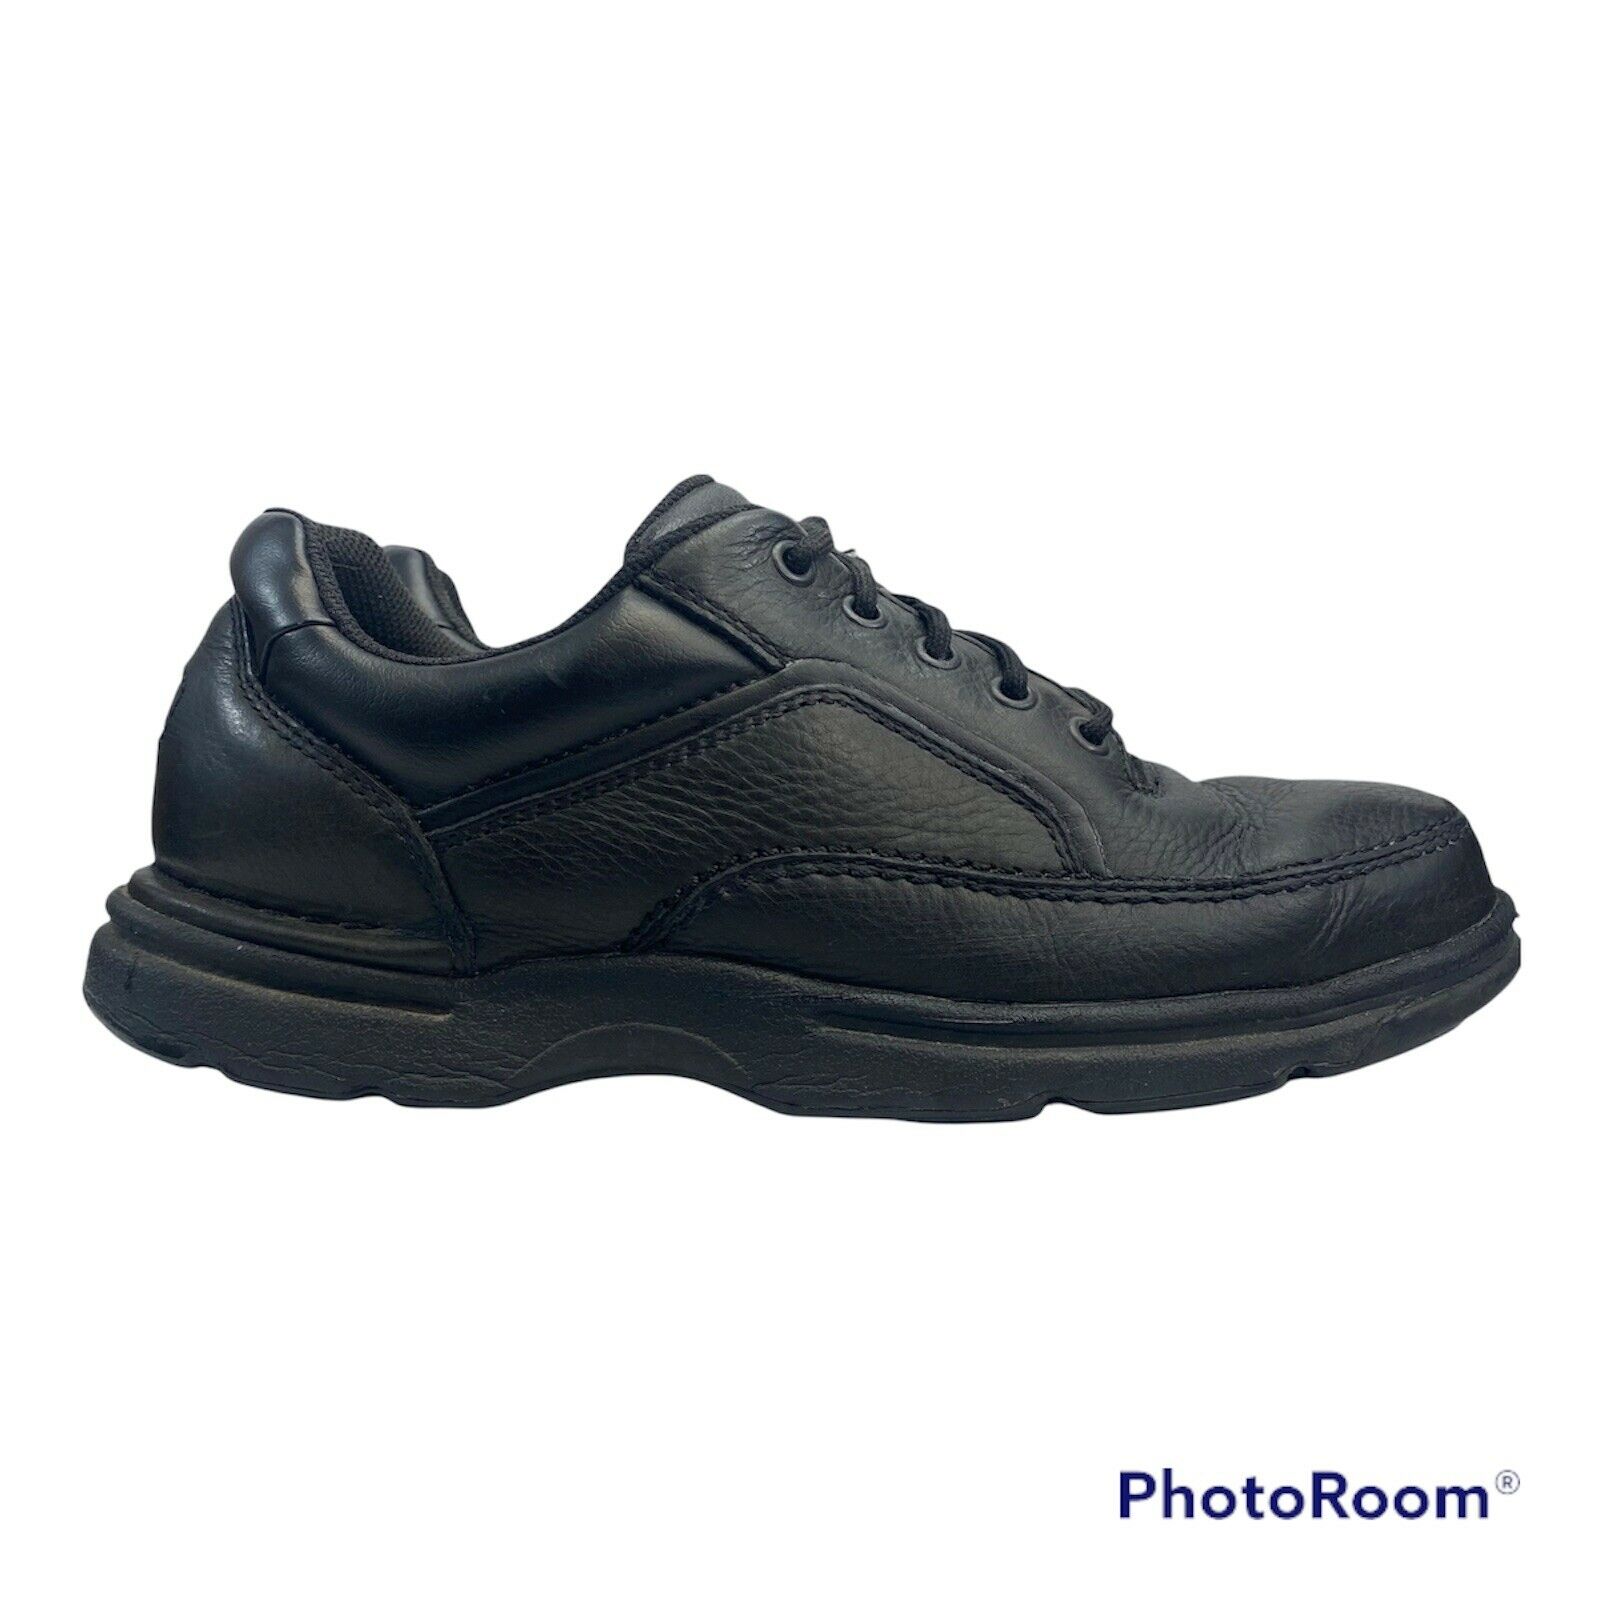 Rockport Eureka Mens Black Leather Lace Up Comfort Walking Shoes Size 9.5M